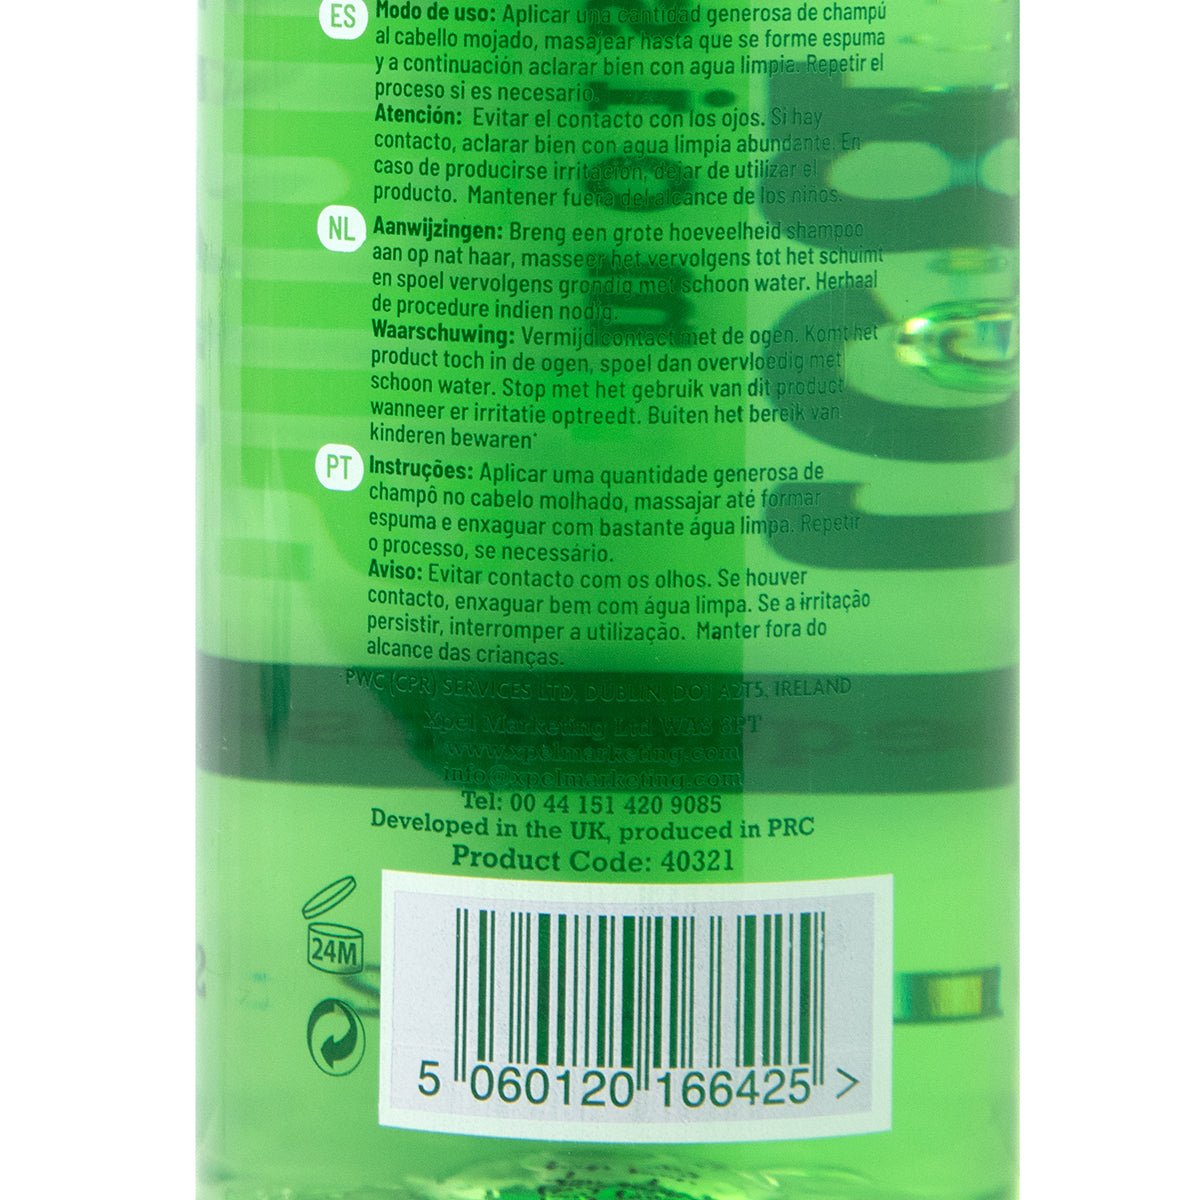 Tea Tree Shampoo Bottle - Intamarque 5060120166425